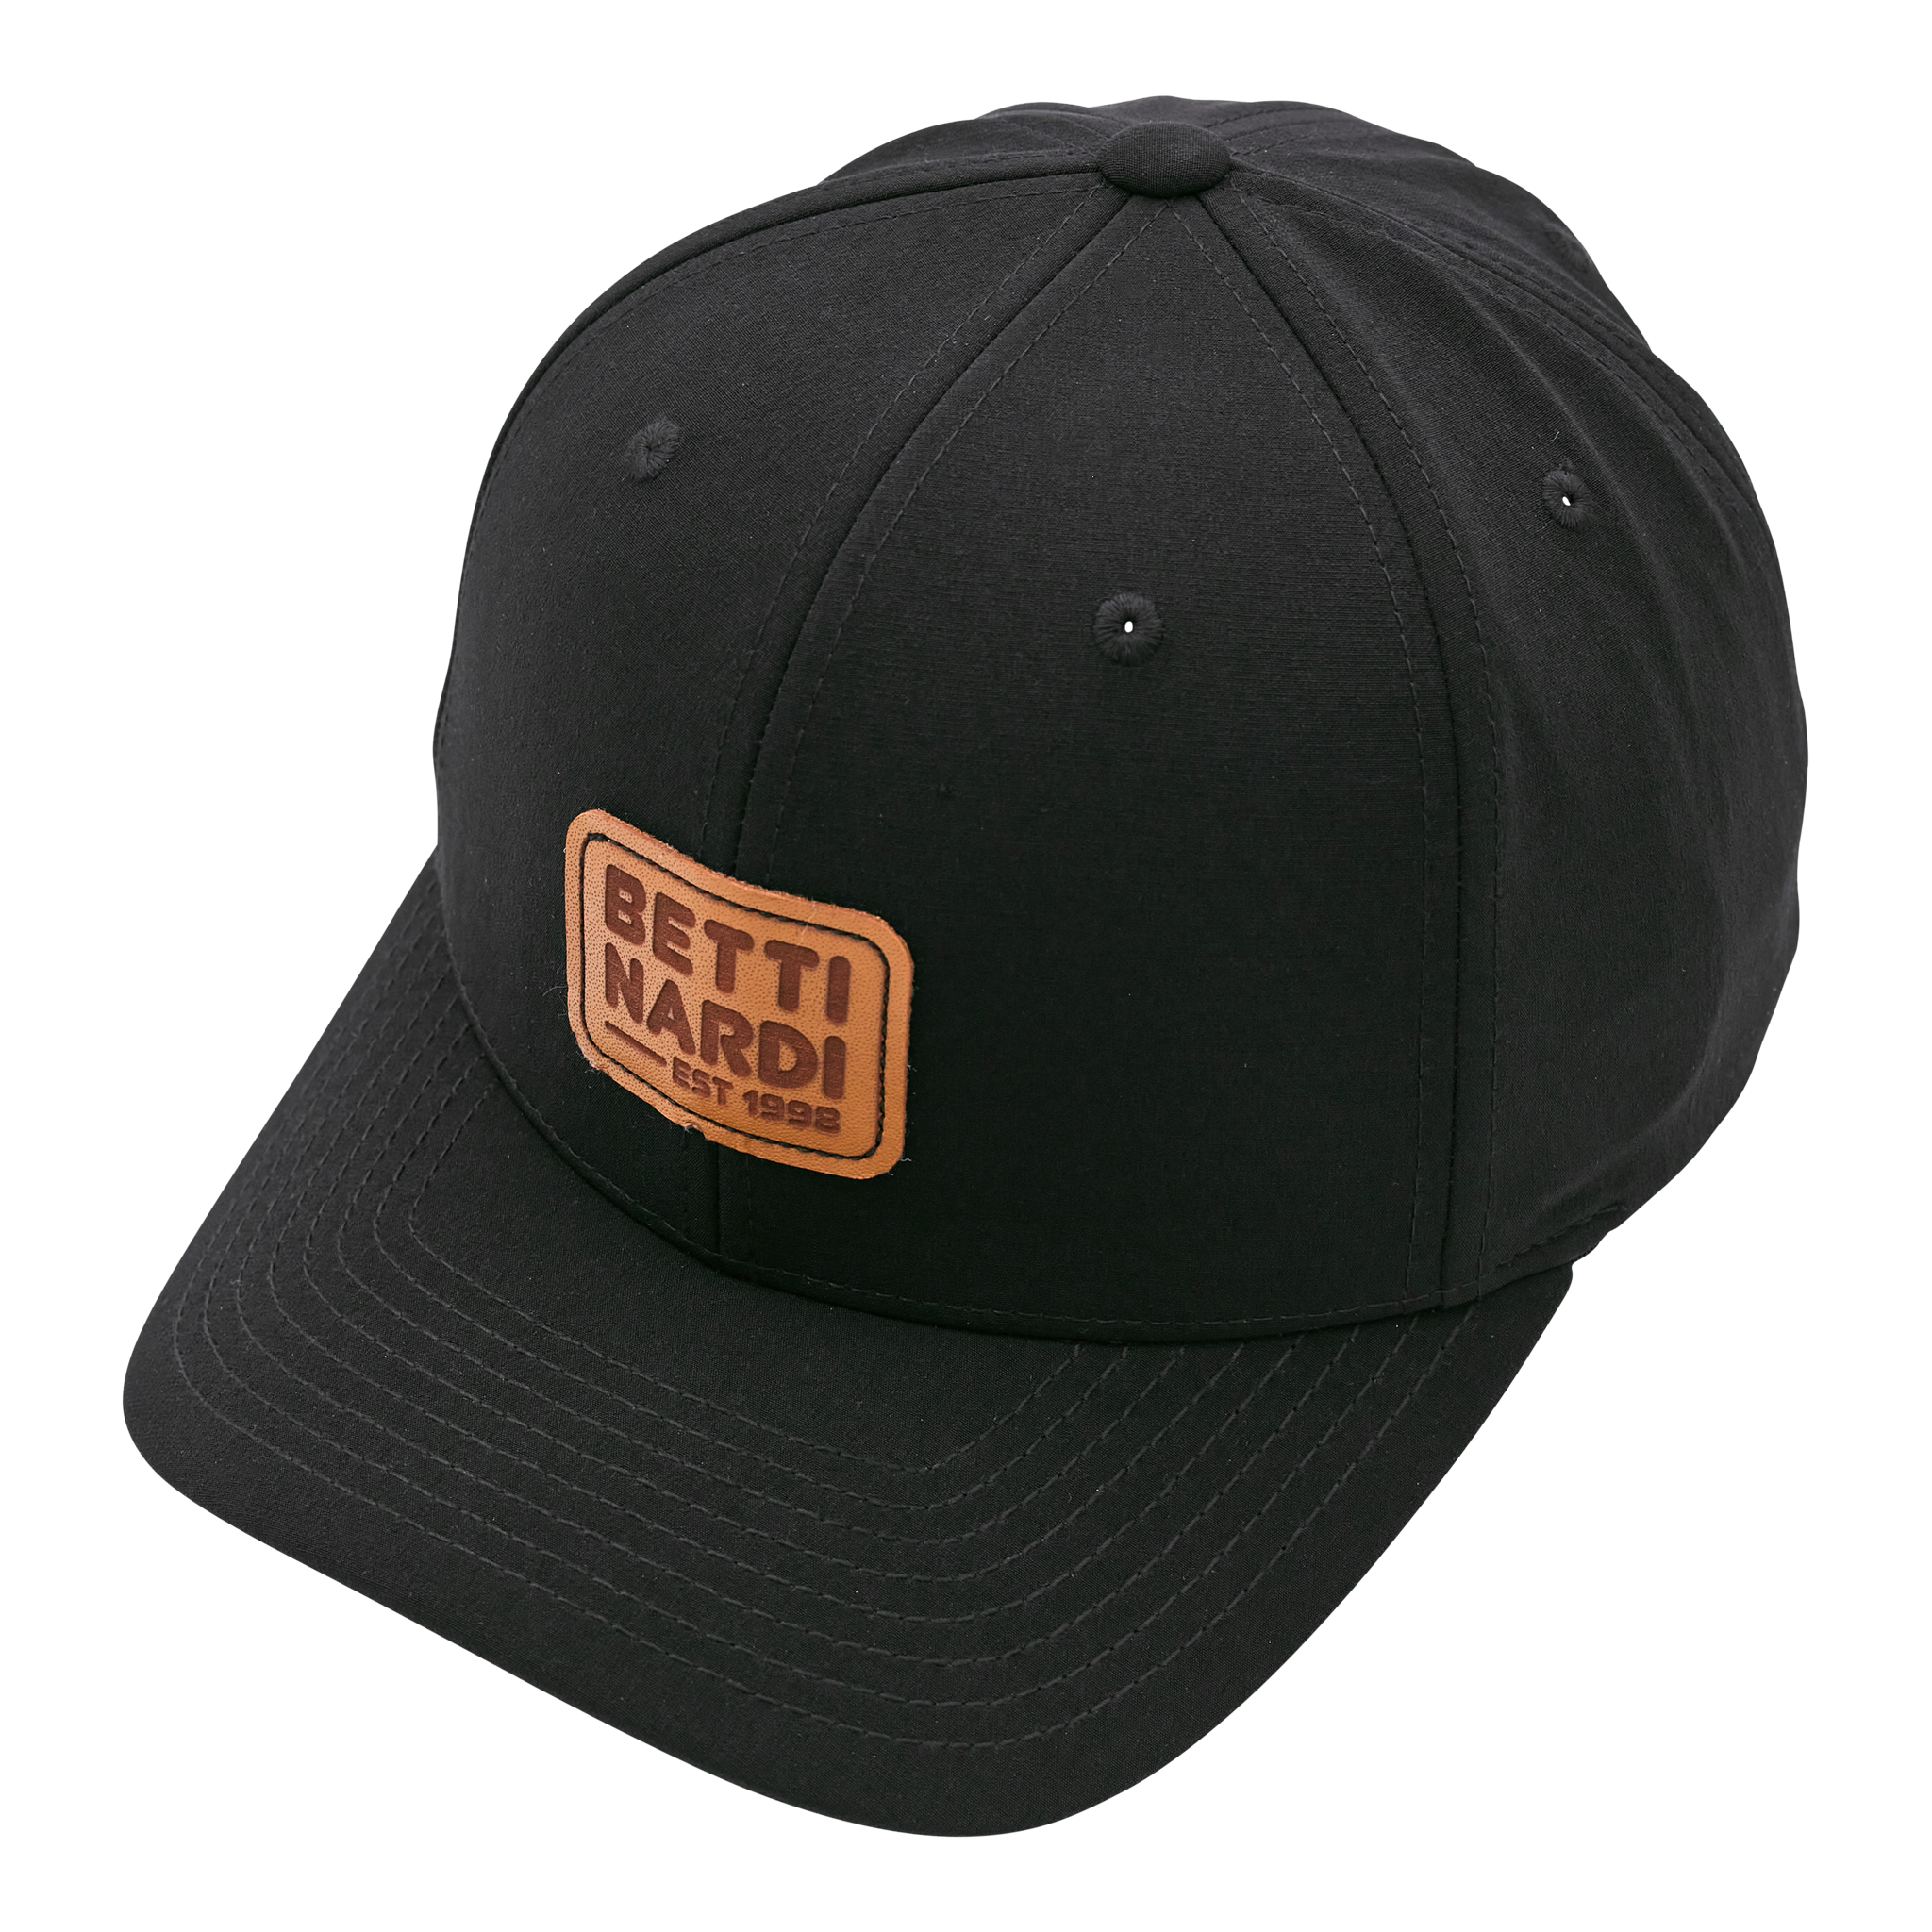 Bettinardi Leather Patch Black Snapback Performance Hat